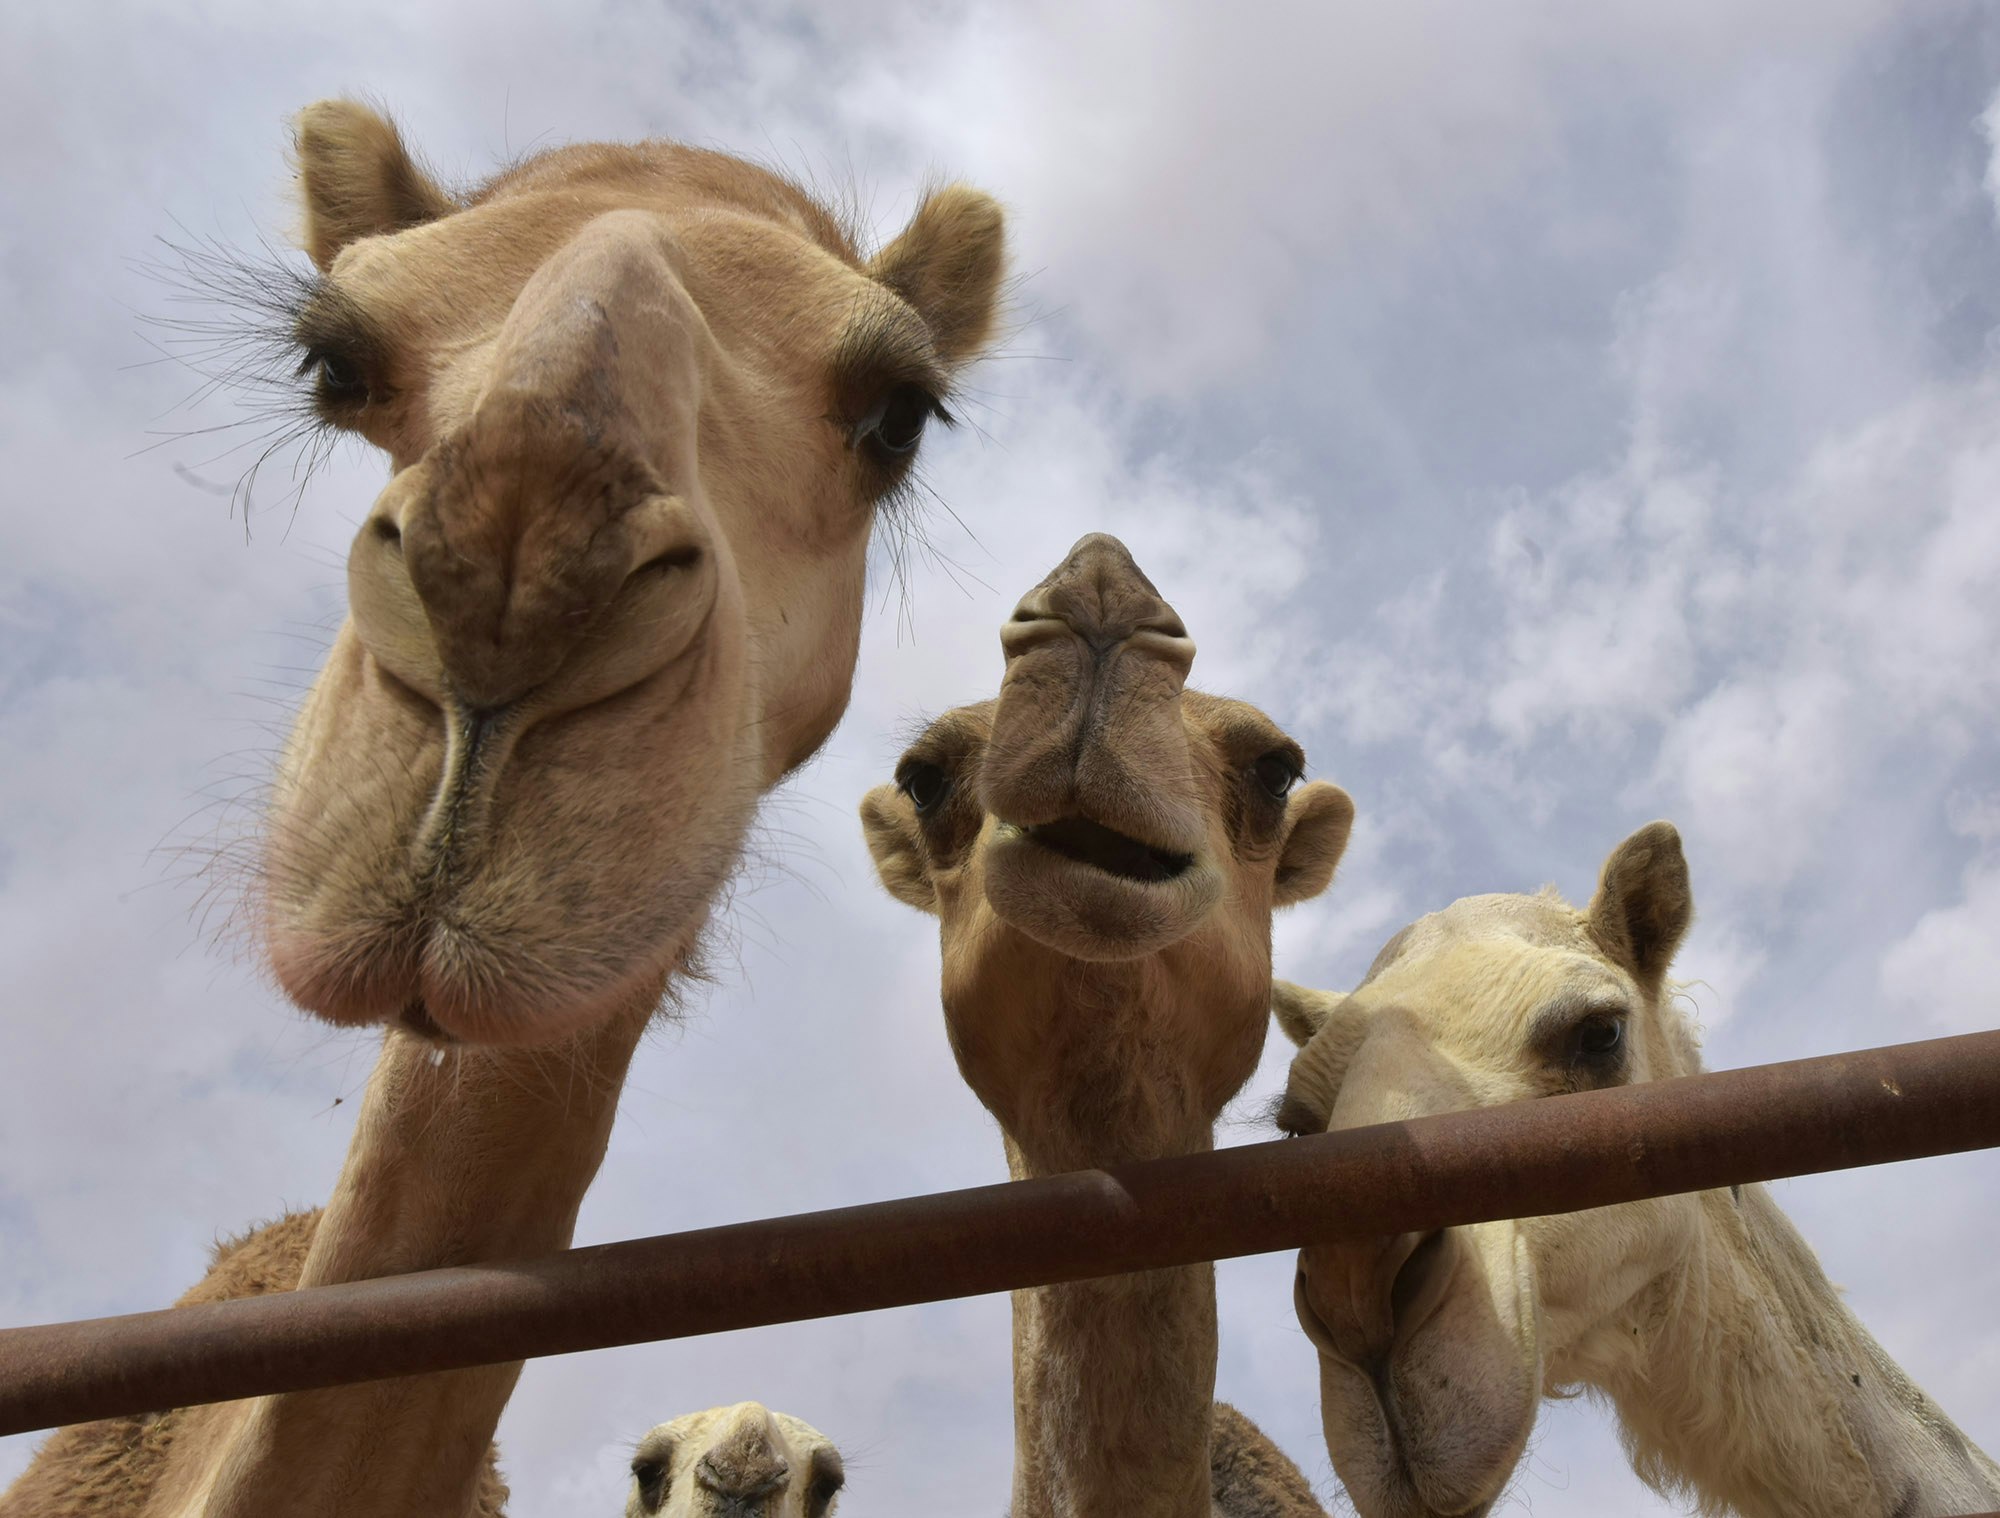 Travel News - Camel beauty contest